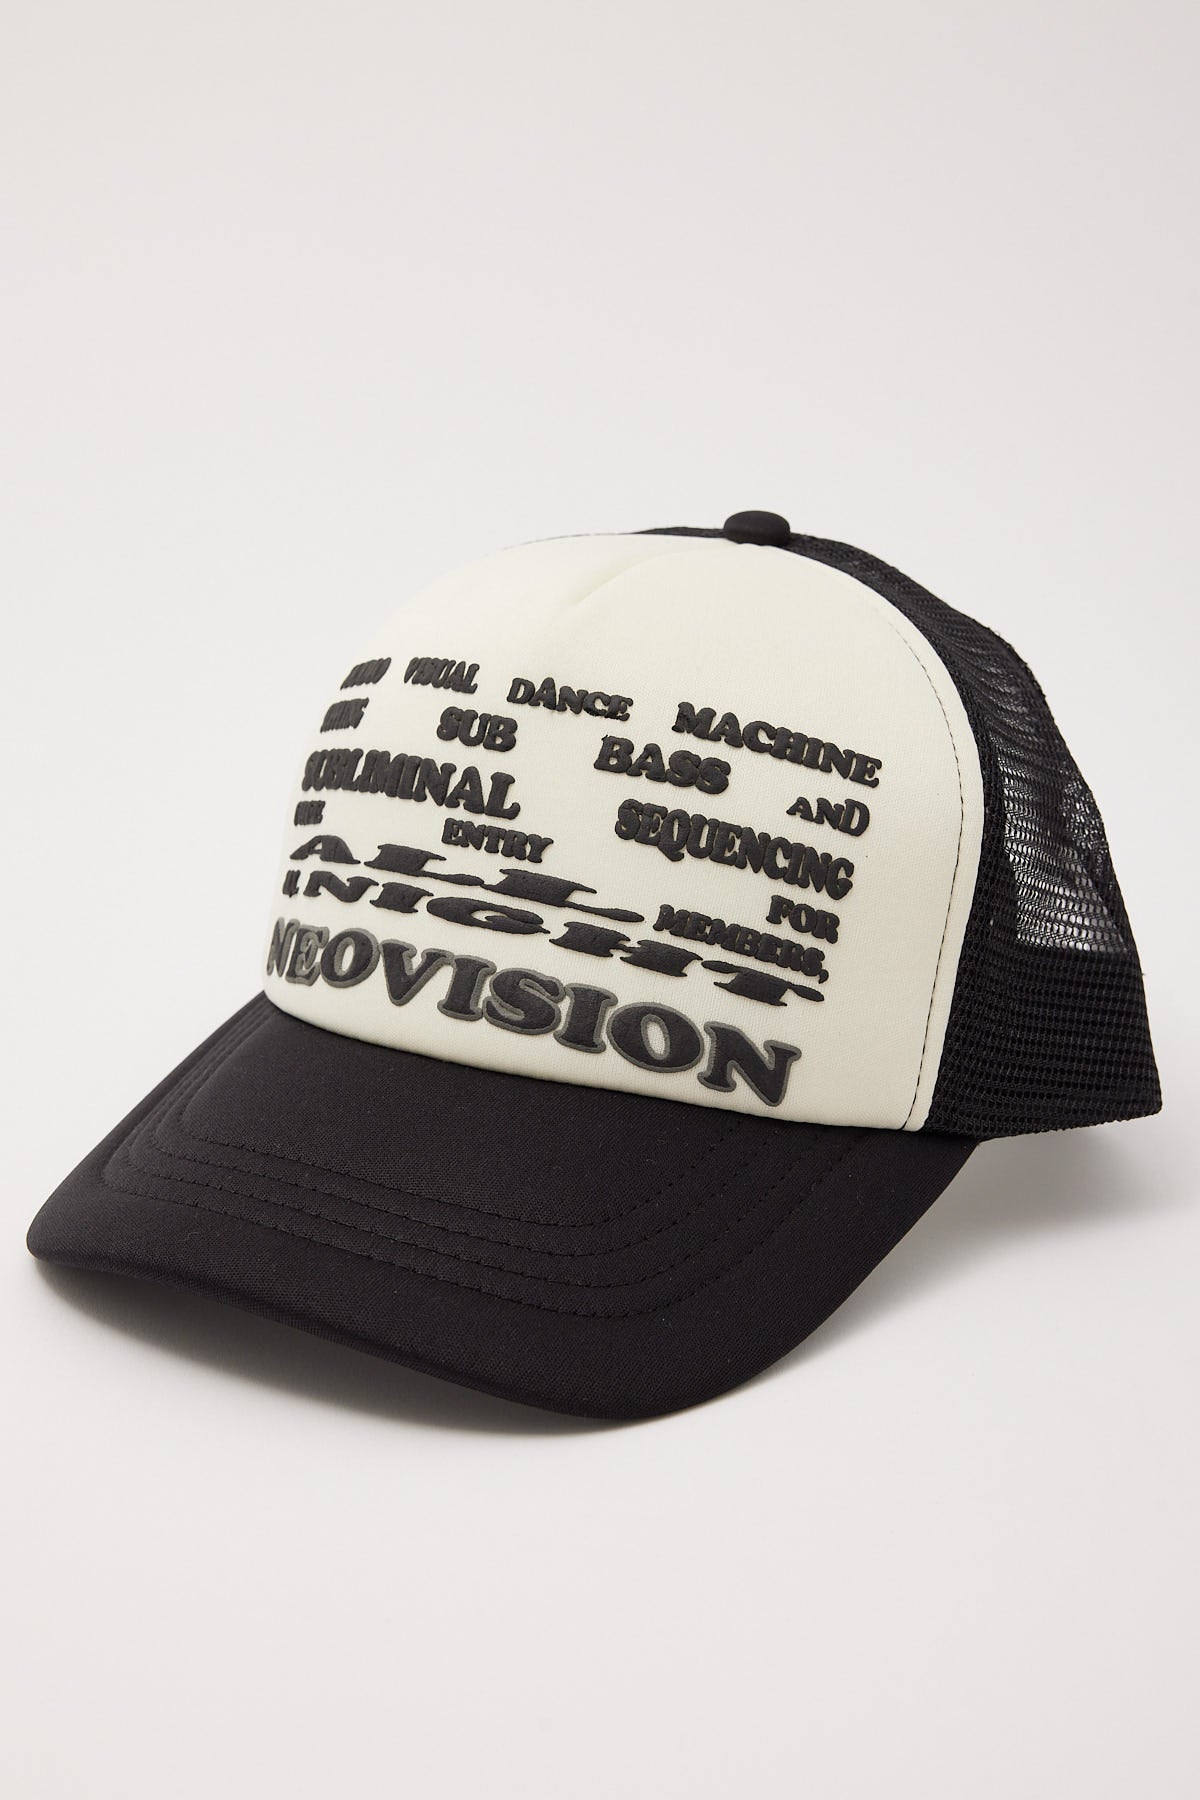 Neovision All Night Trucker Black/Off White